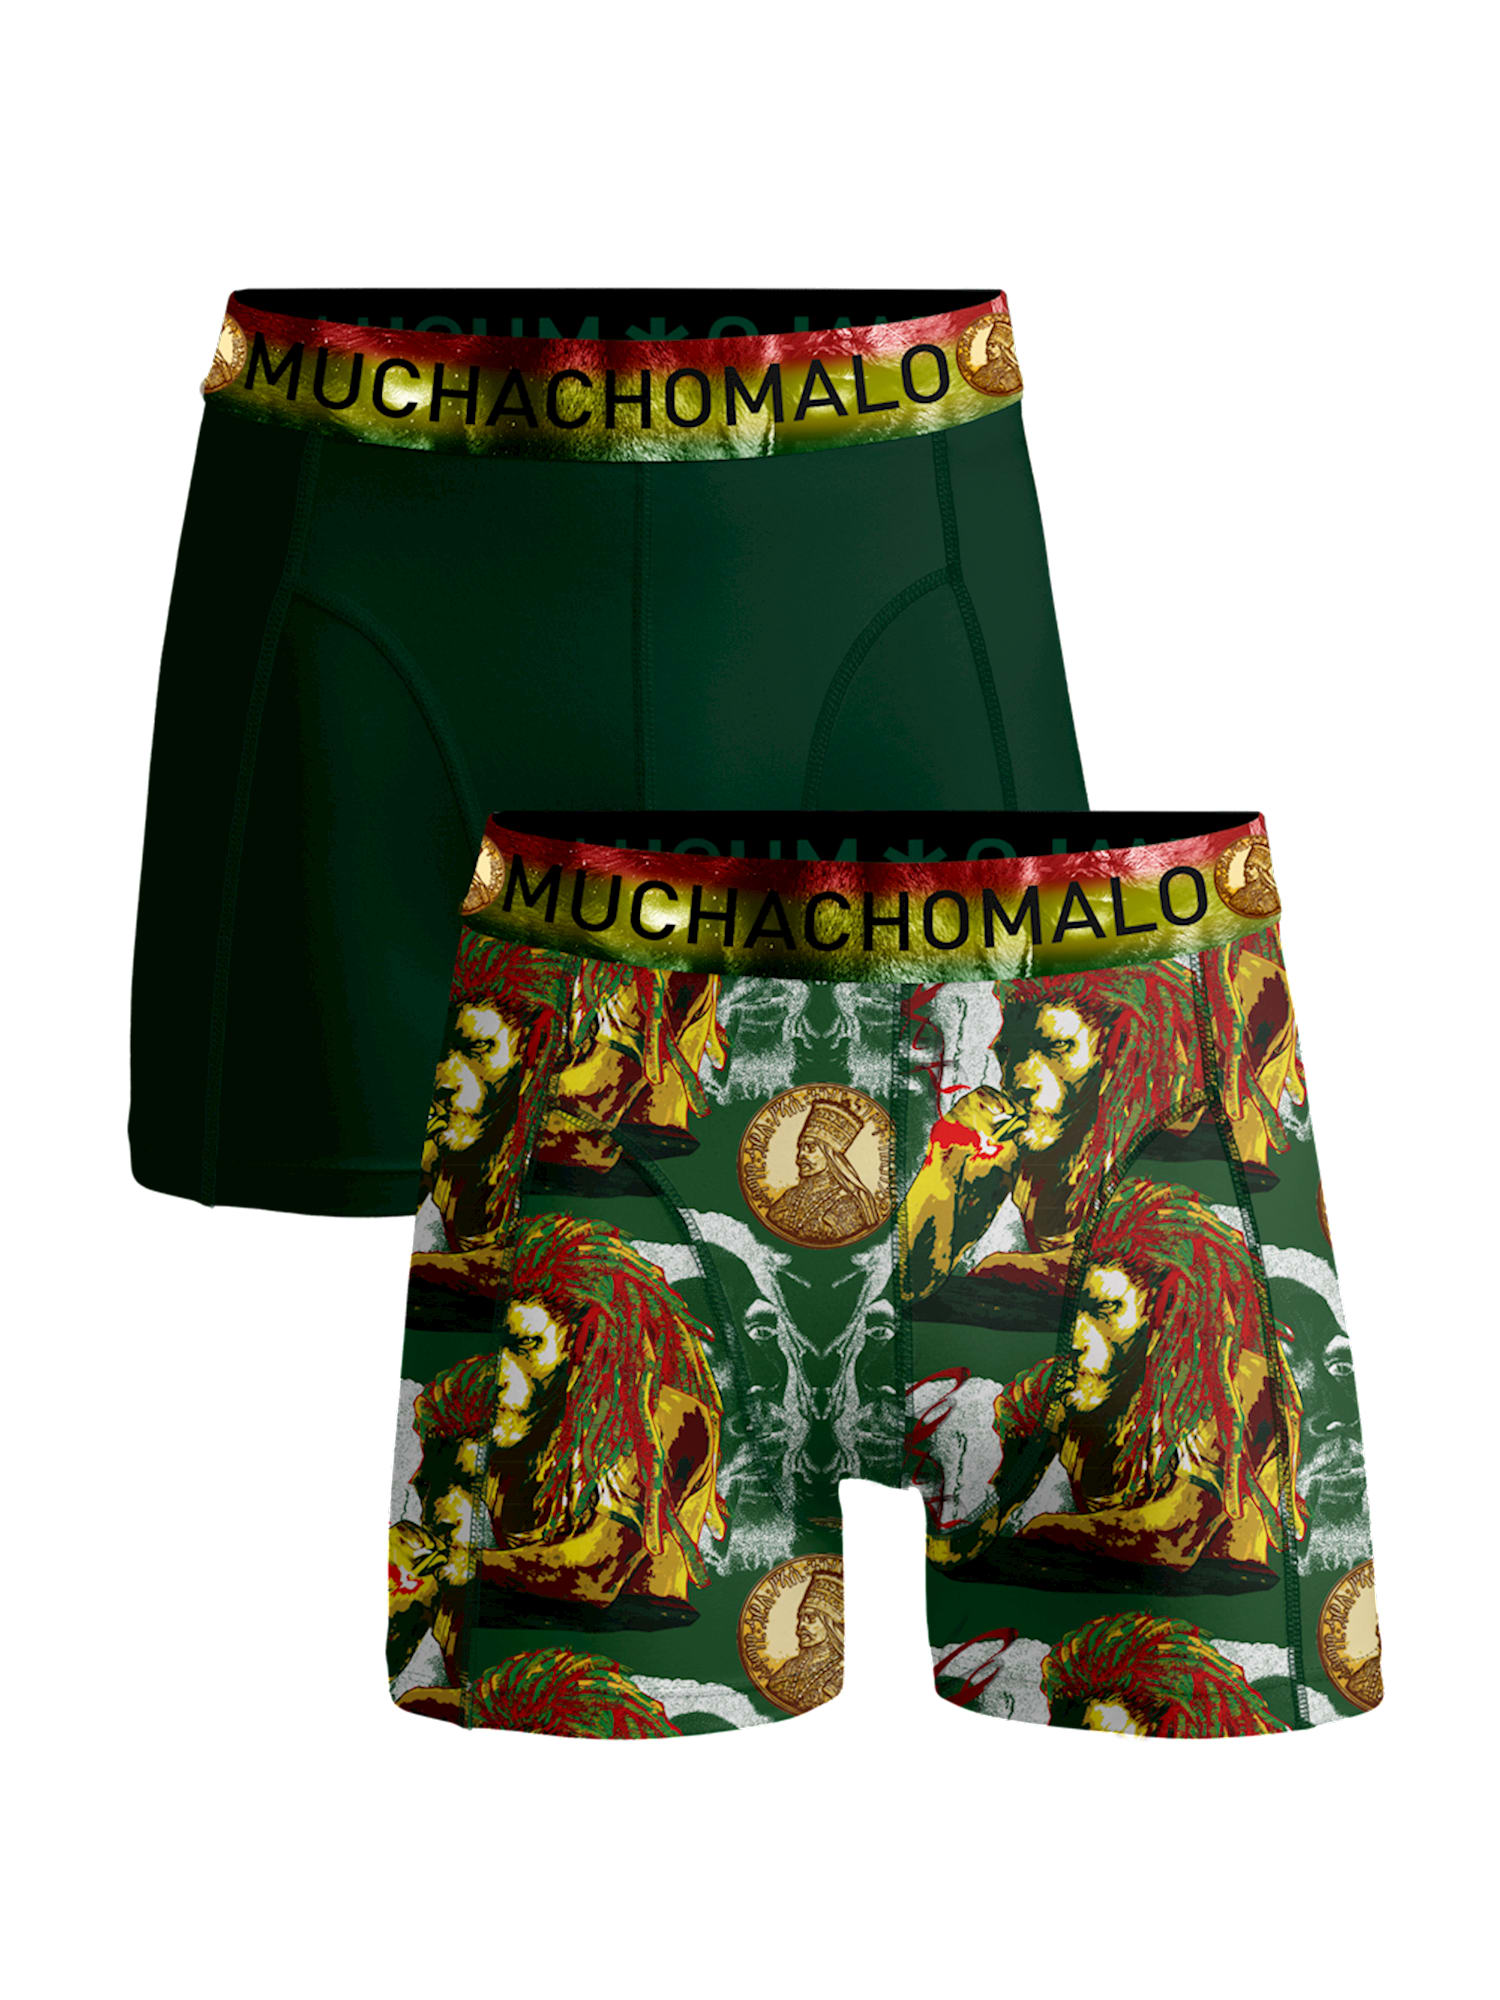 Боксеры Muchachomalo 2er-Set: Boxershorts, цвет Multicolor/Green боксеры muchachomalo 2er set boxershorts цвет blue blue